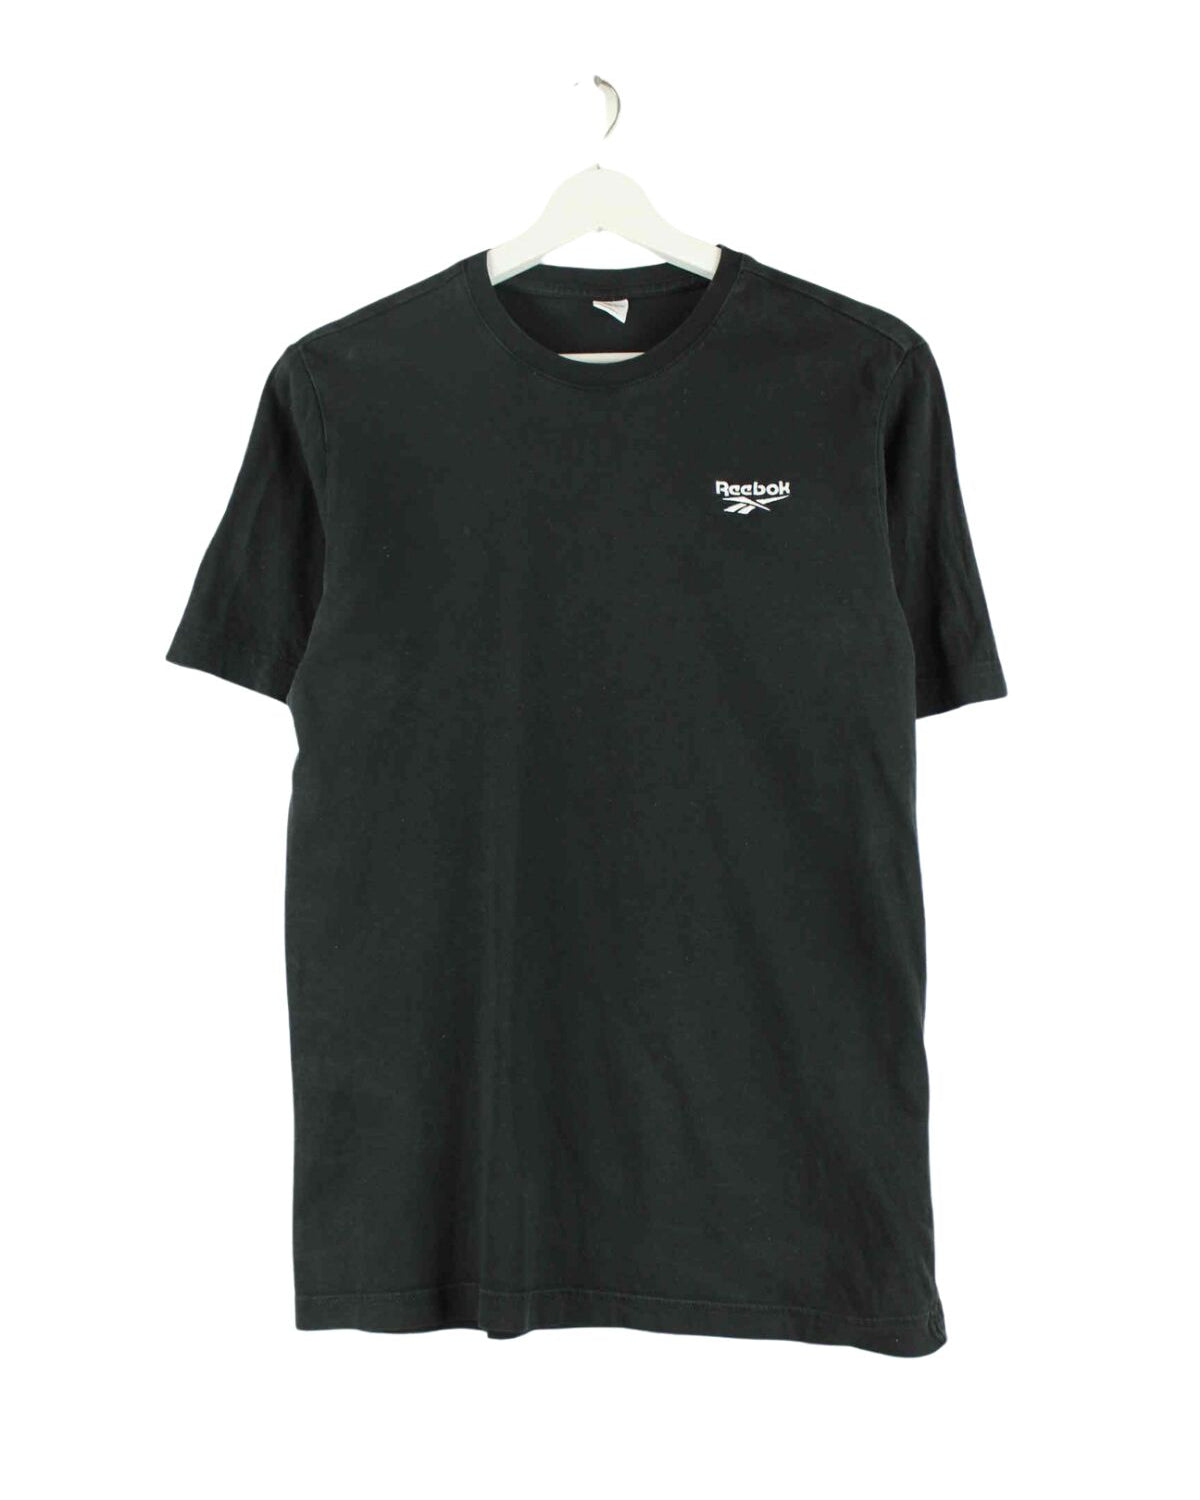 Reebok Basic Embroidered T-Shirt Schwarz S (front image)